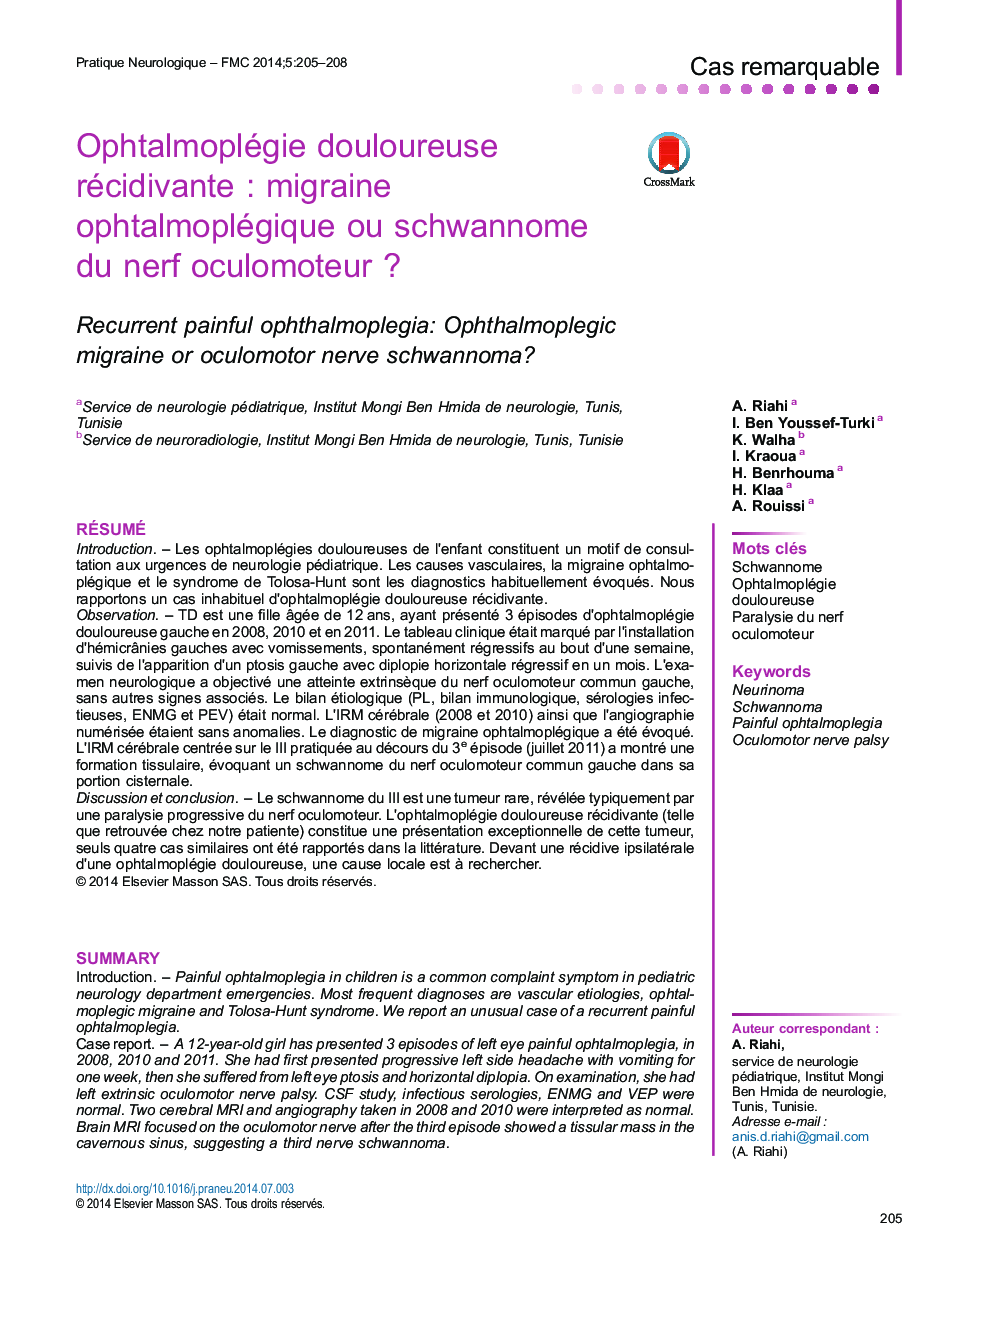 Ophtalmoplégie douloureuse récidivanteÂ : migraine ophtalmoplégique ou schwannome du nerf oculomoteurÂ ?